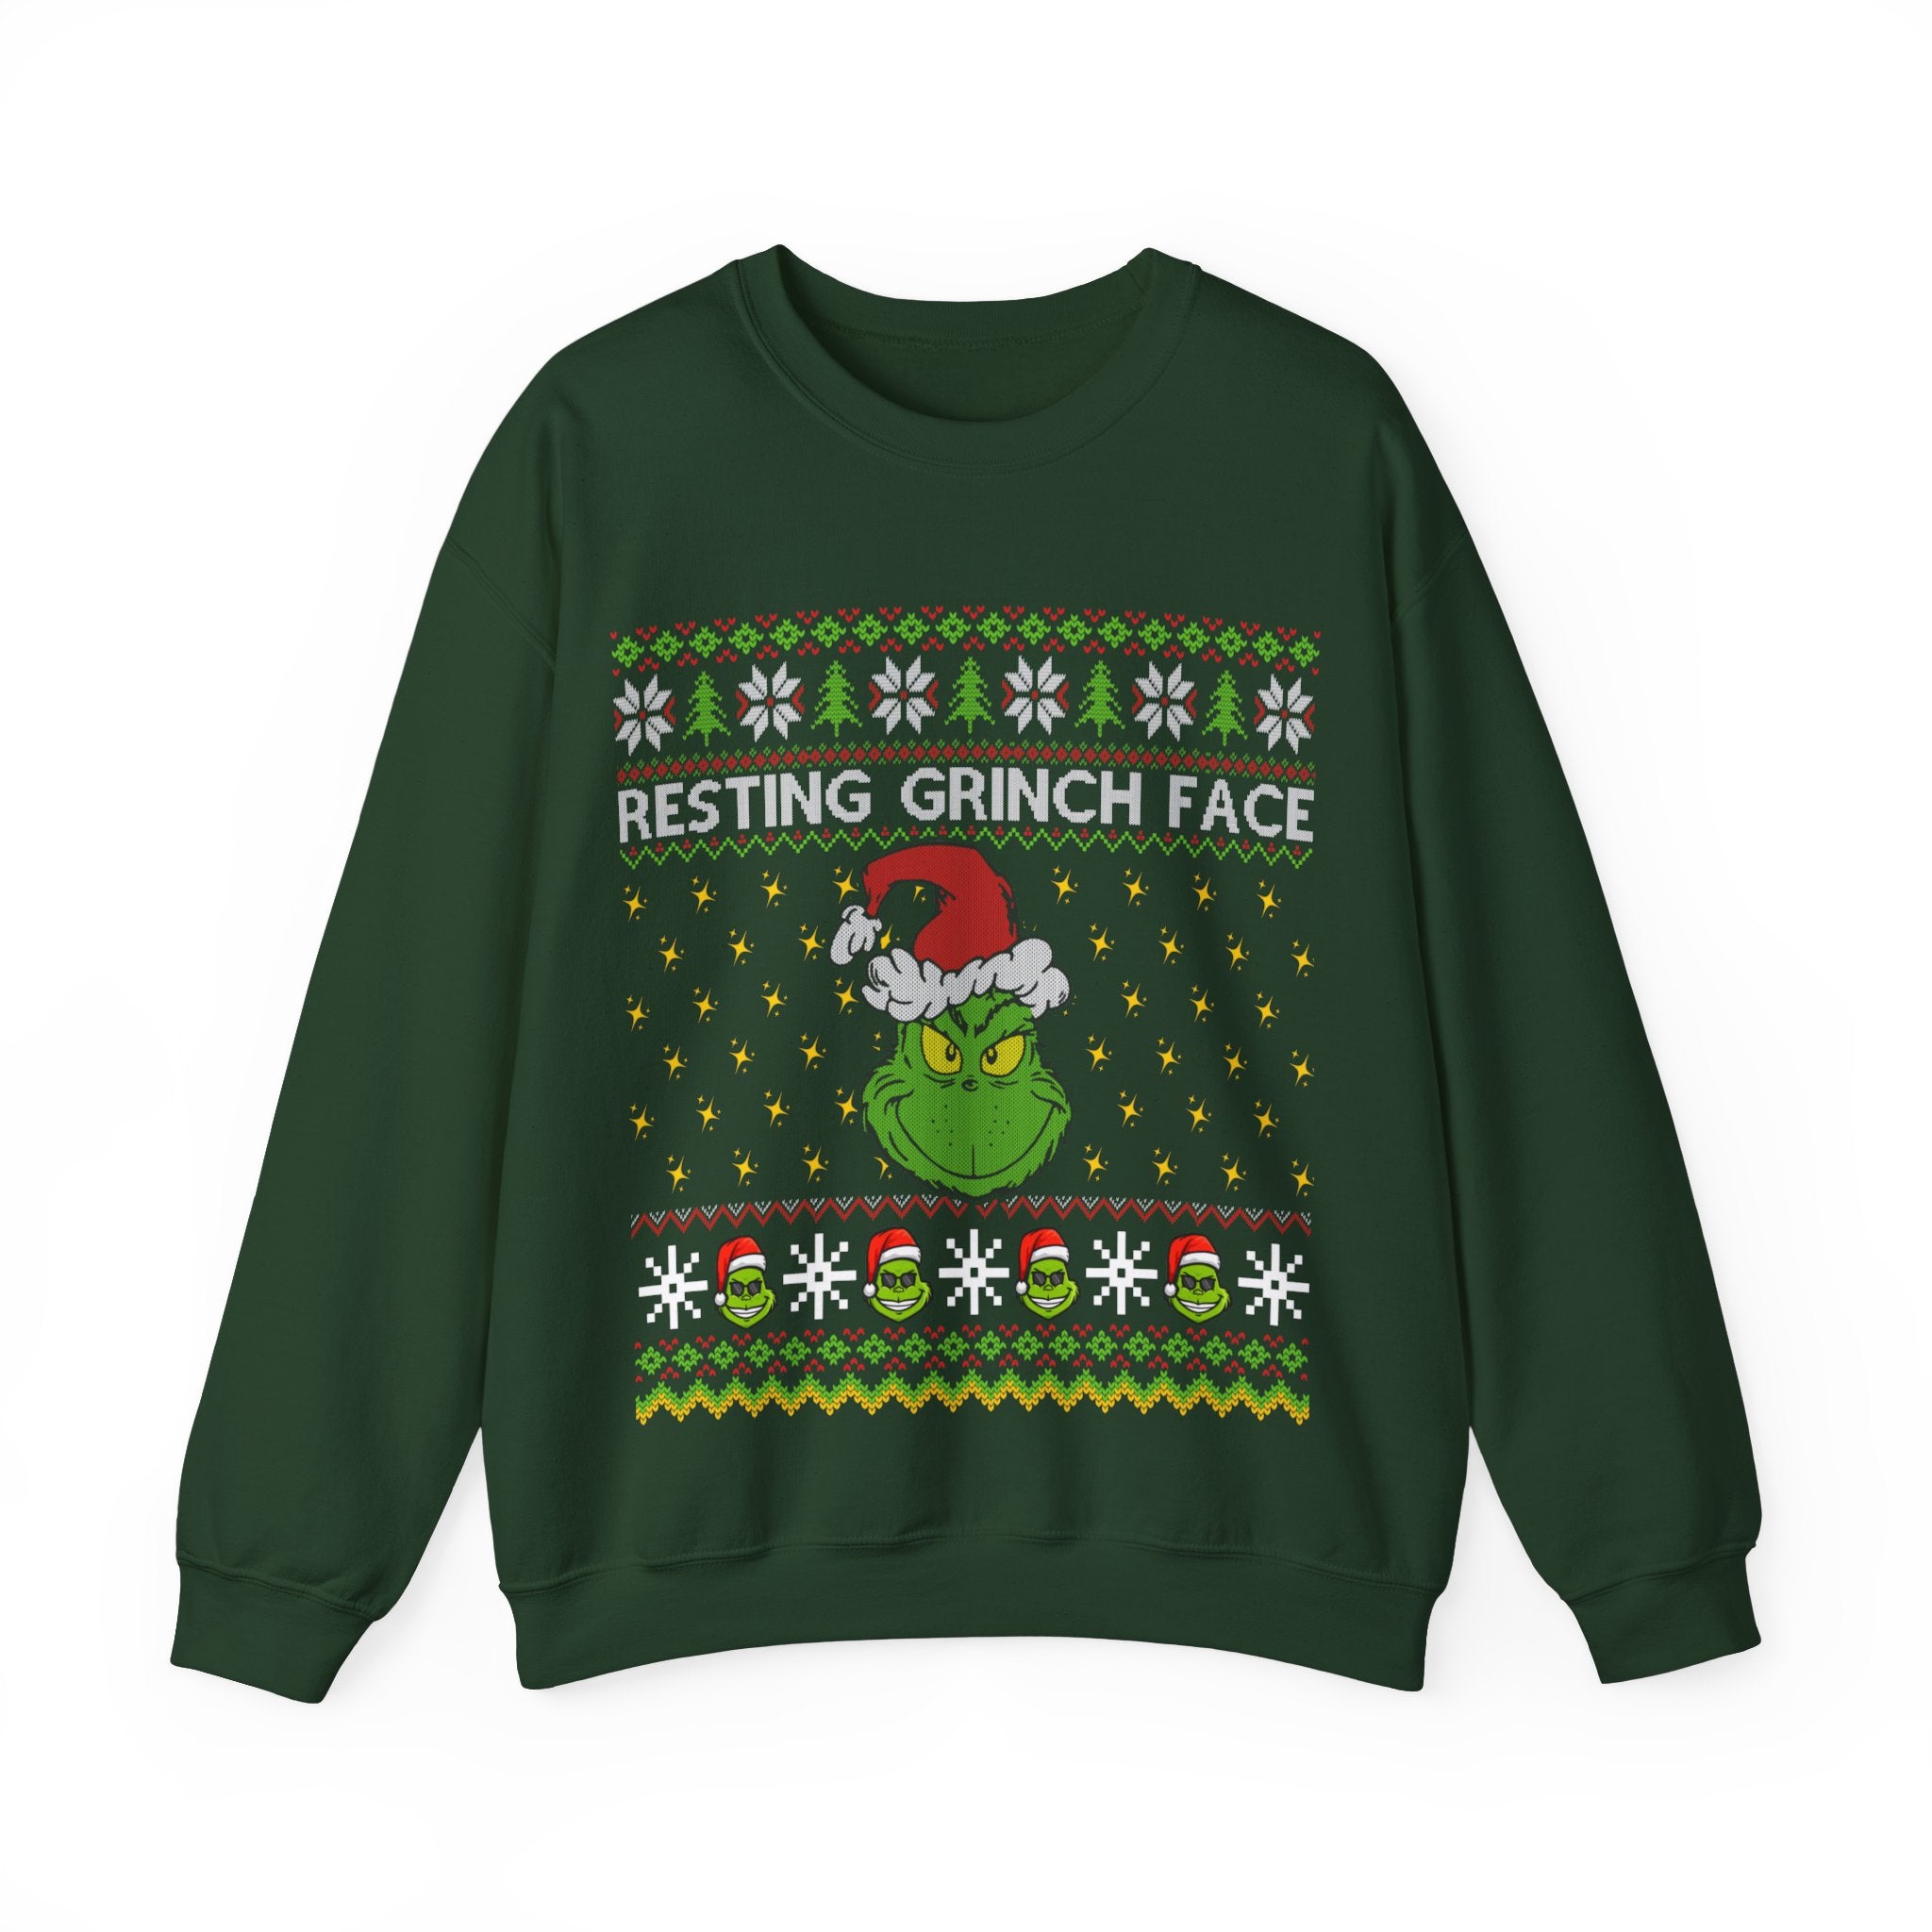 "Resting Grinch Face" Christmas Sweatshirt